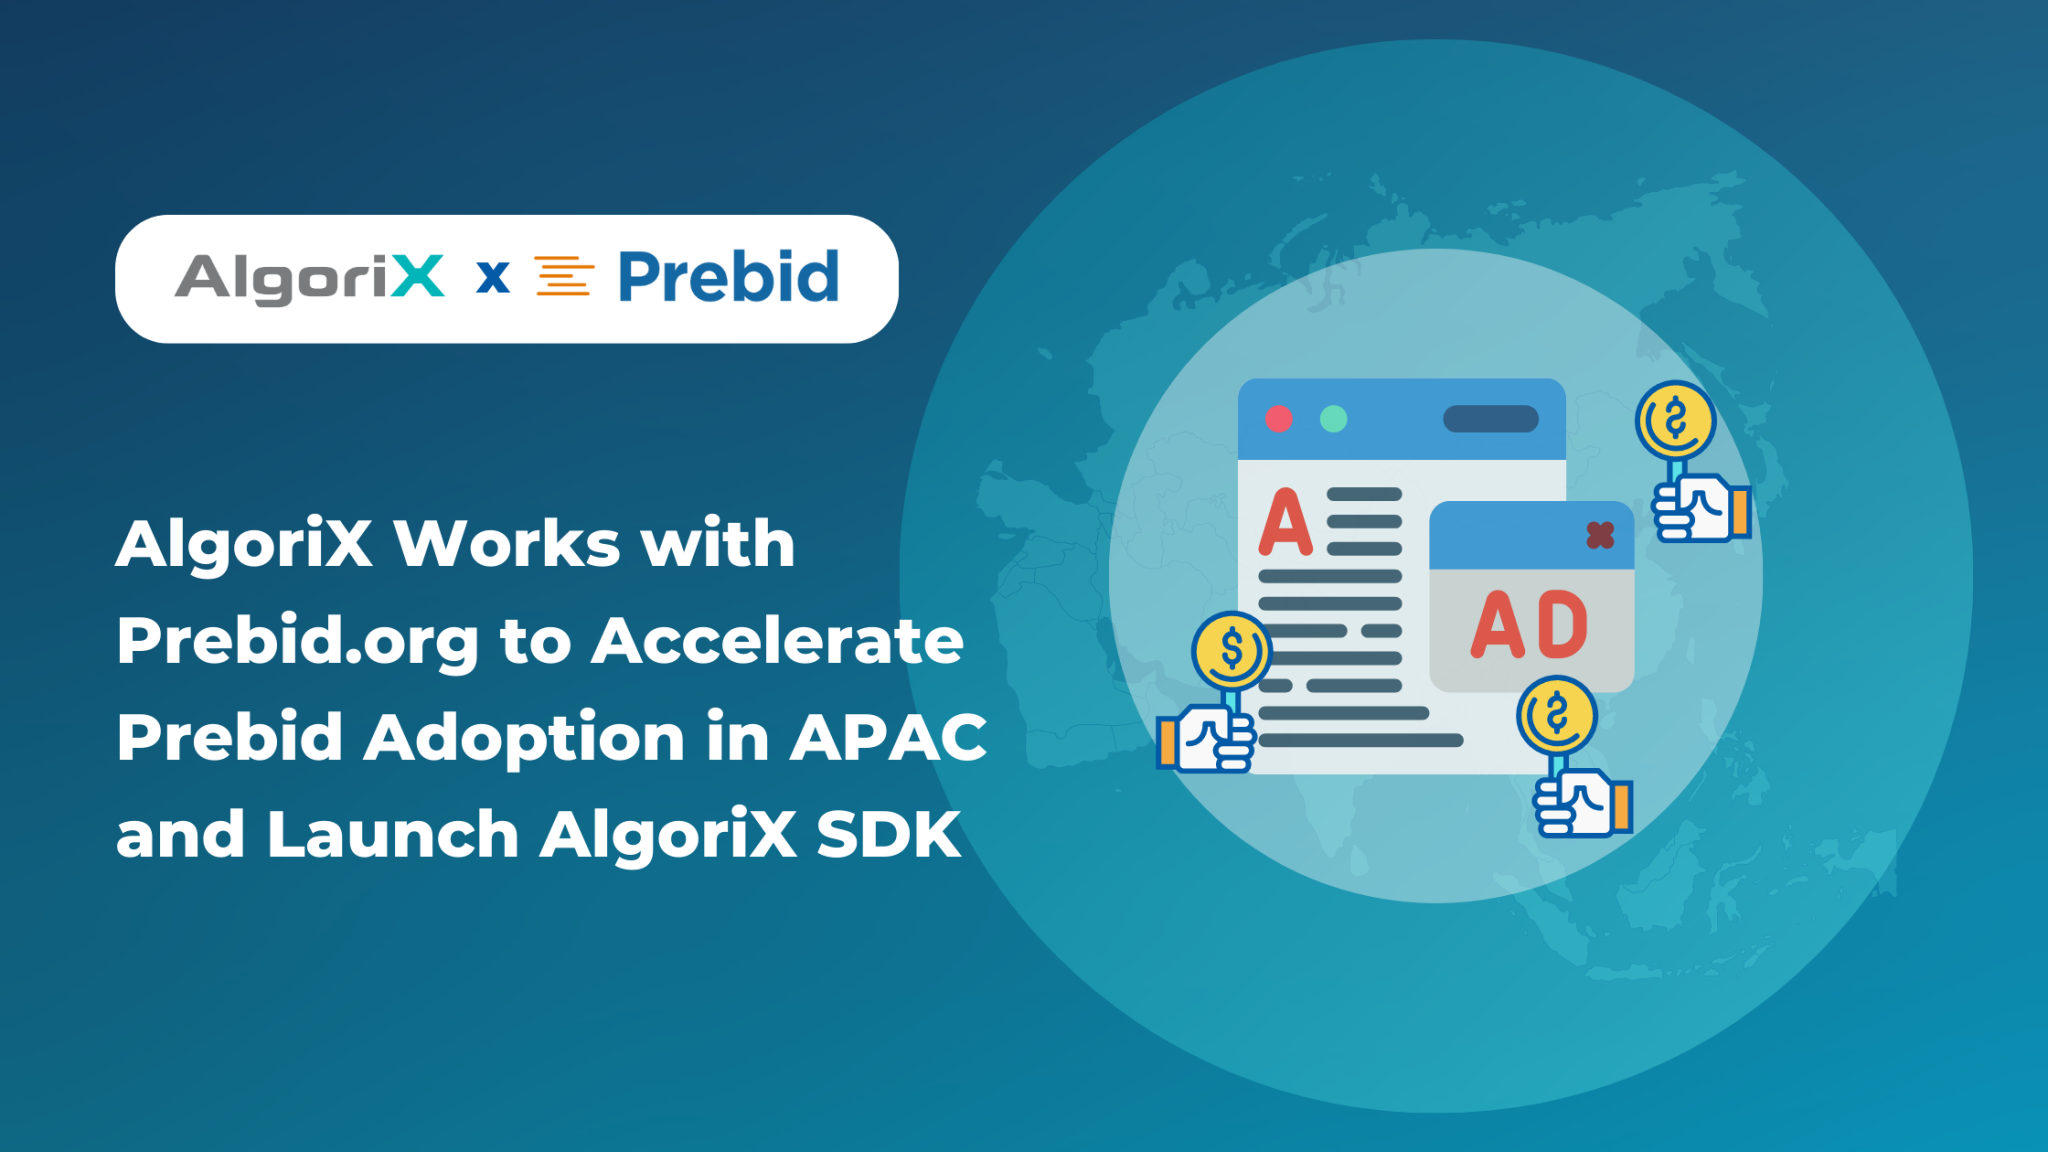 AlgoriX Works with Prebid.org to Accelerate Prebid Adoption in APAC and Launch AlgoriX SDK